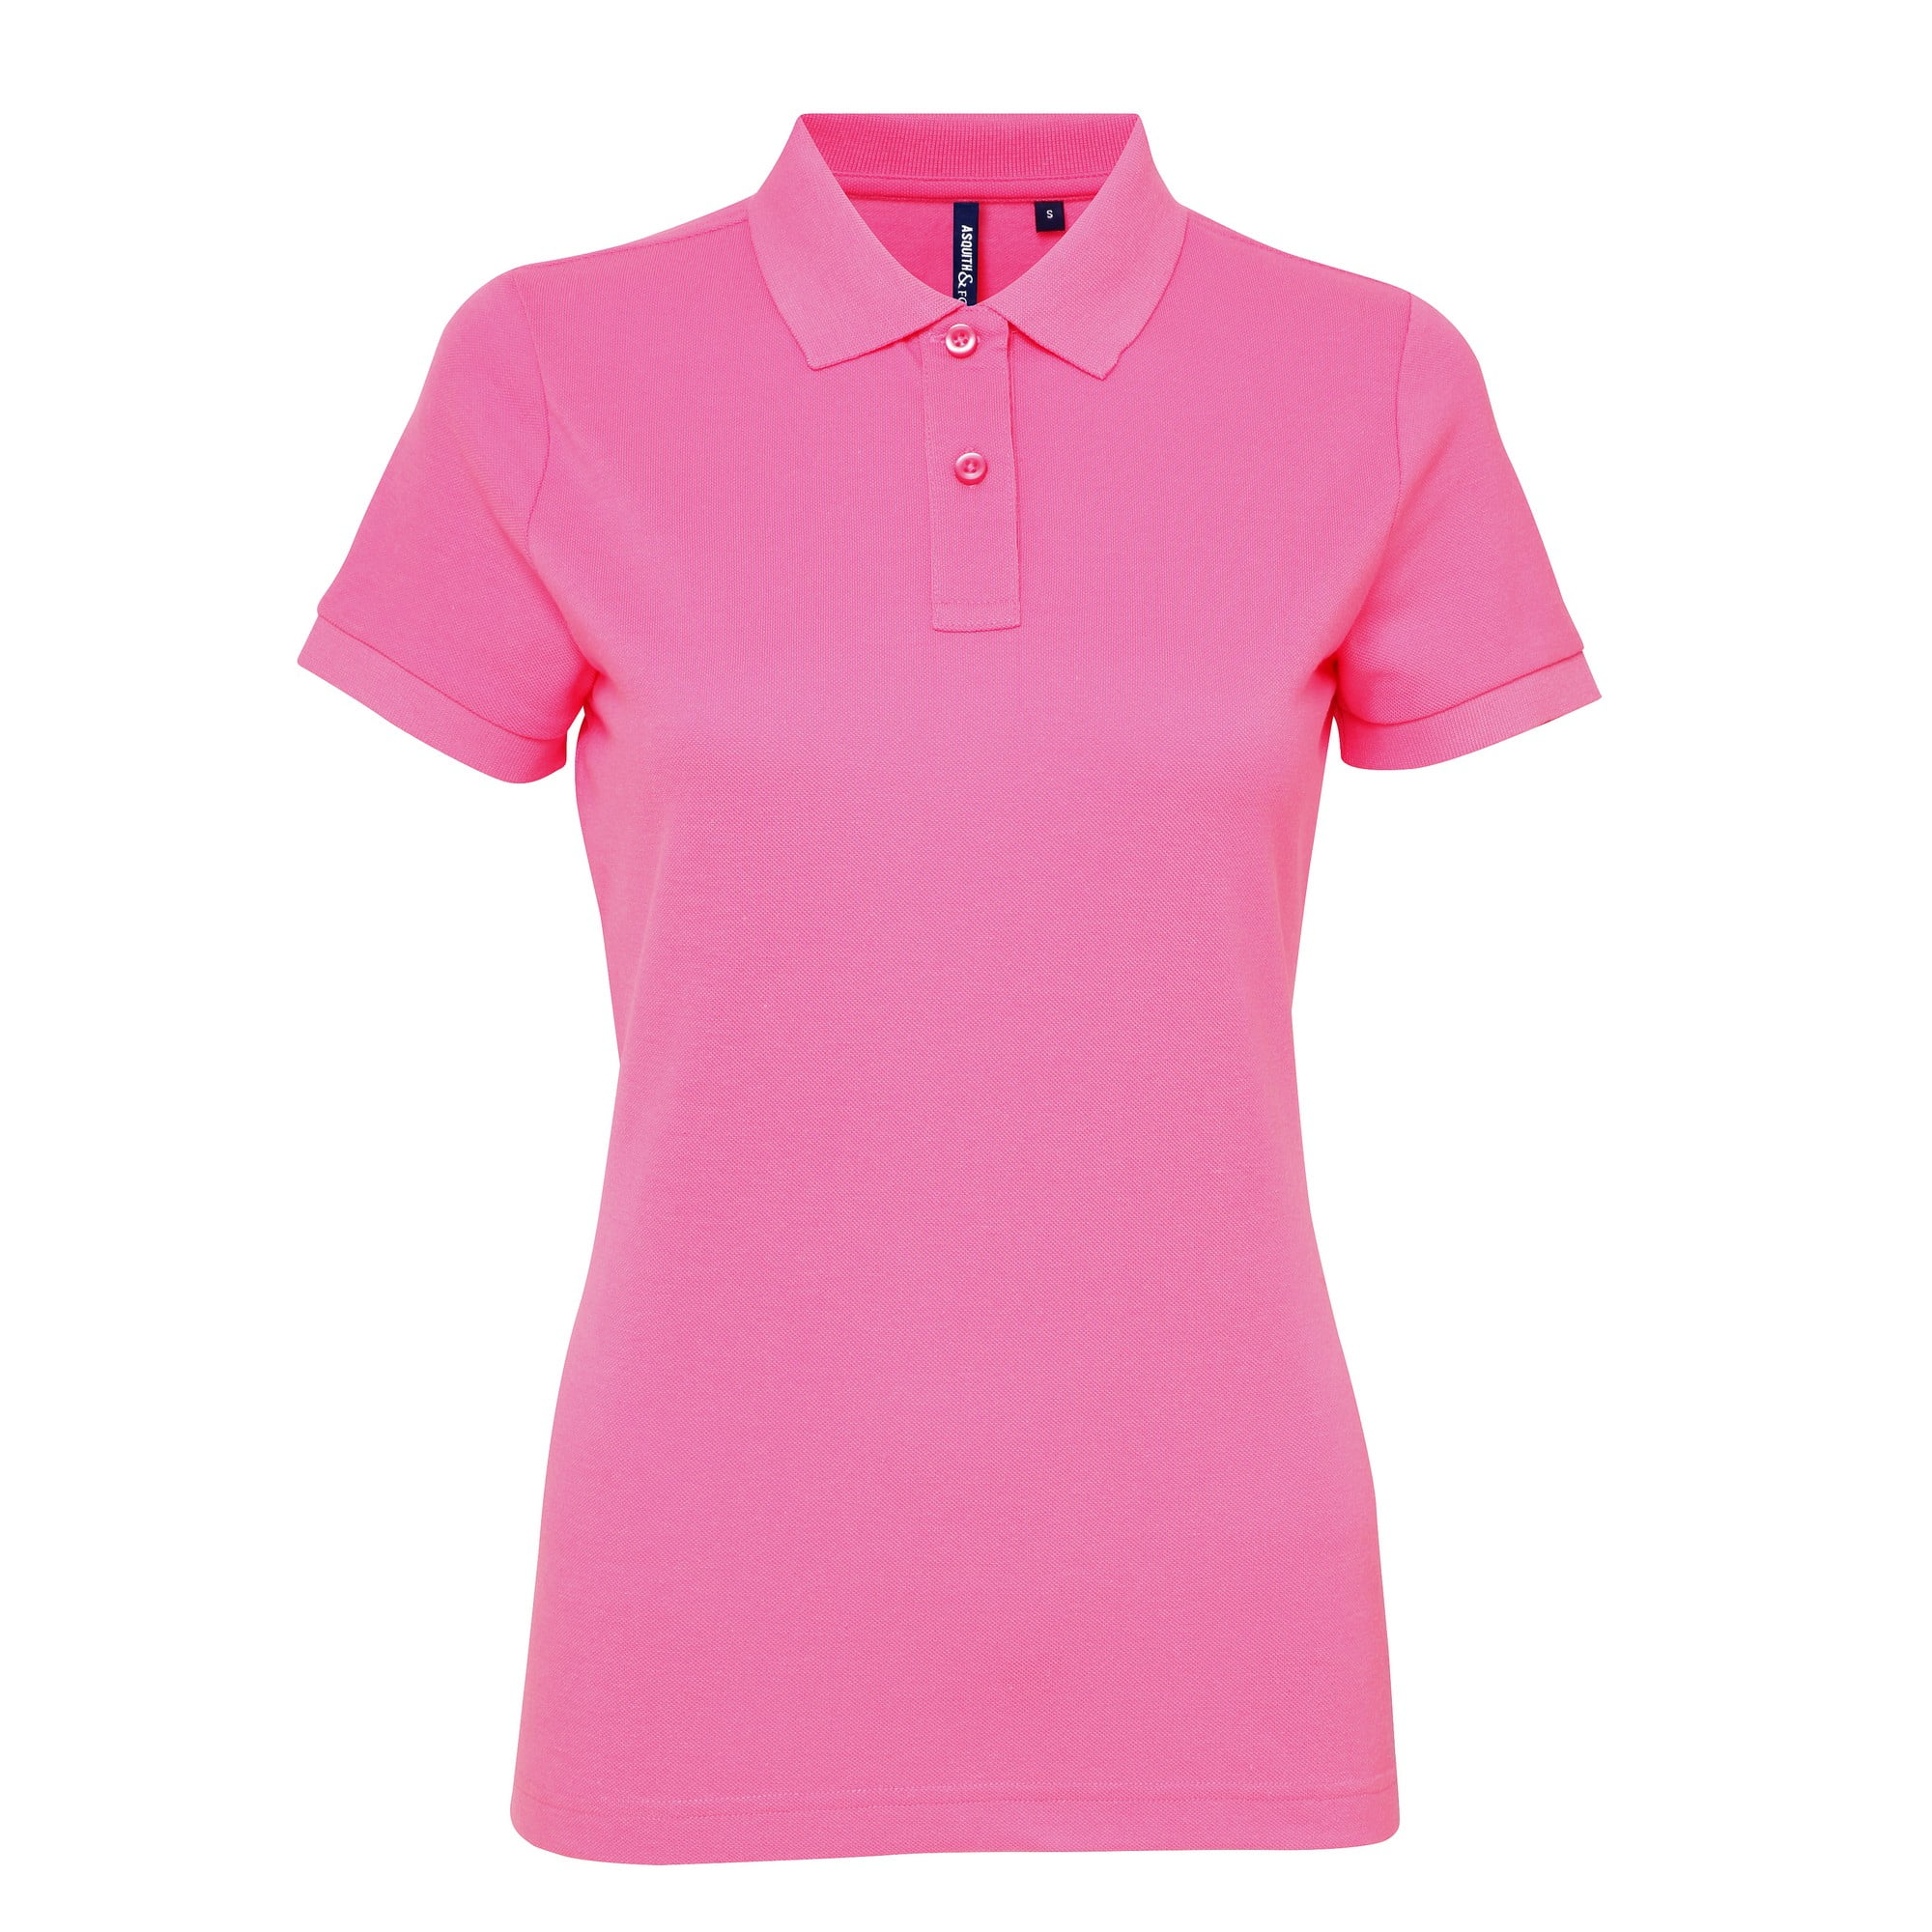 Asquith & Fox Womens Short Sleeve Performance Blend Polo Shirt